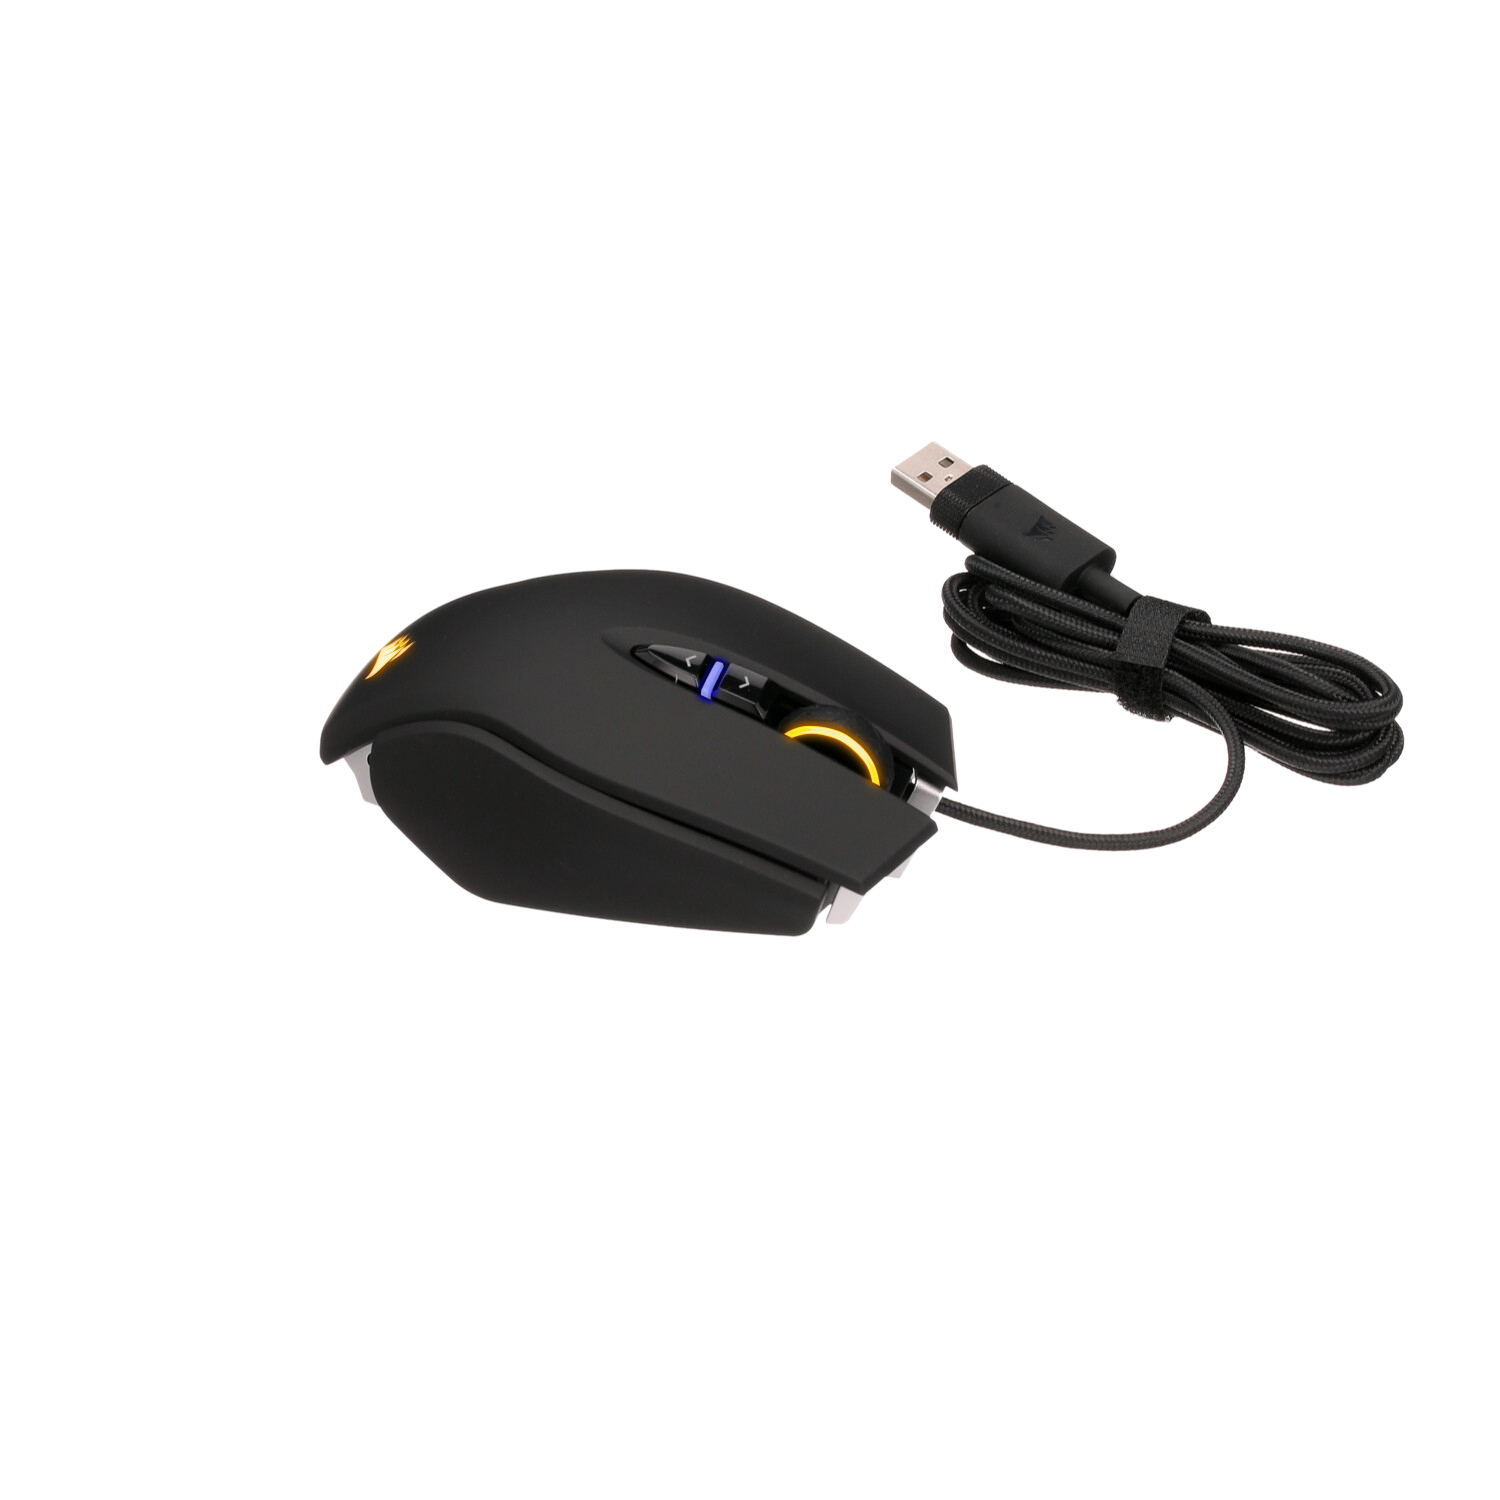 Corsair M65 RGB Elite Mouse PC Tunable Gaming